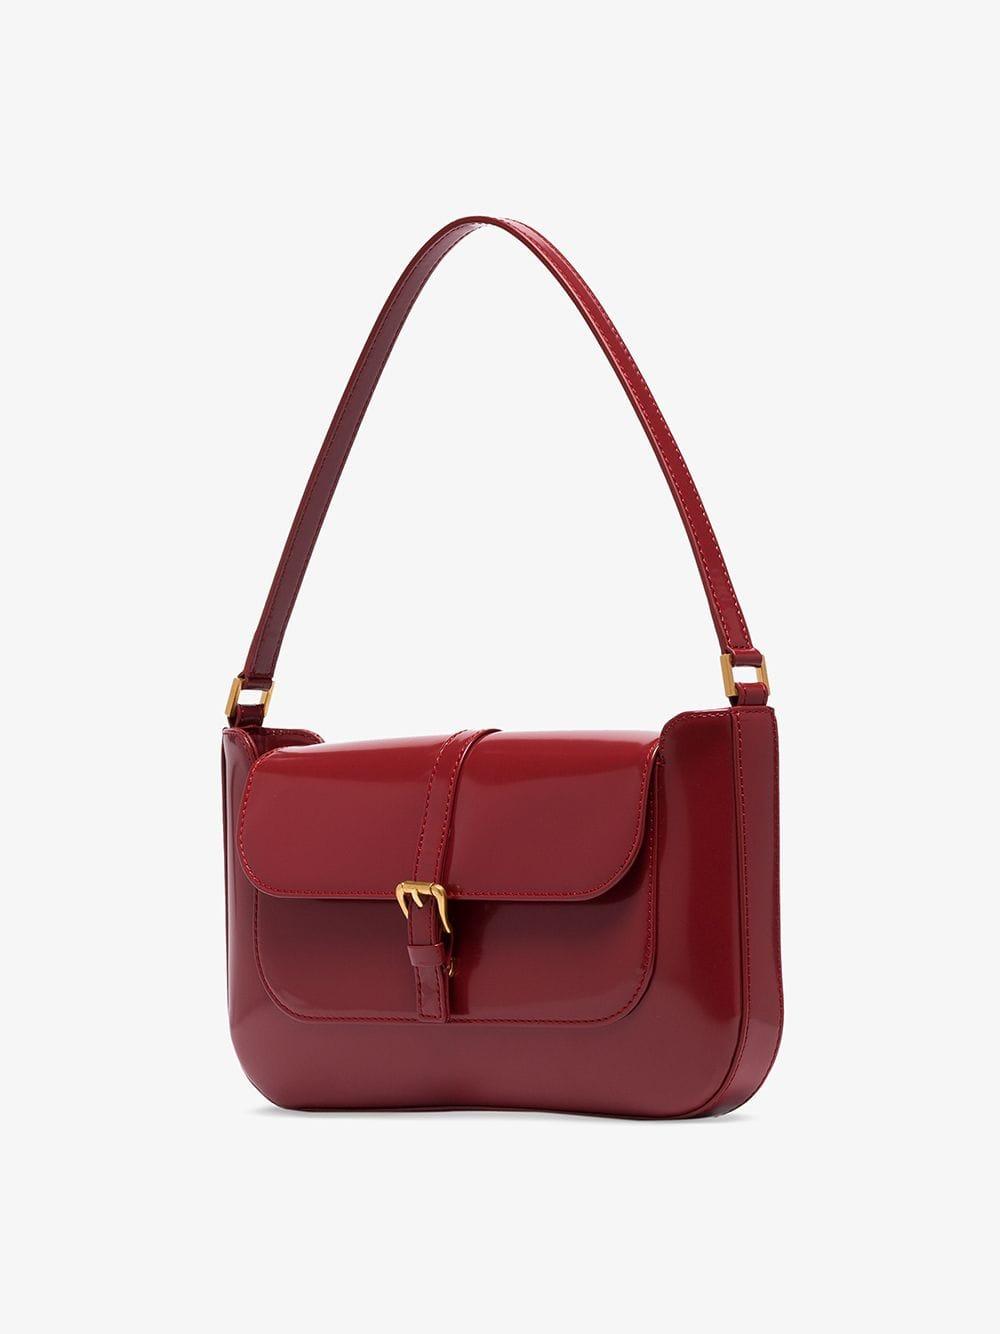 BY FAR Red Miranda Leather Shoulder Bag